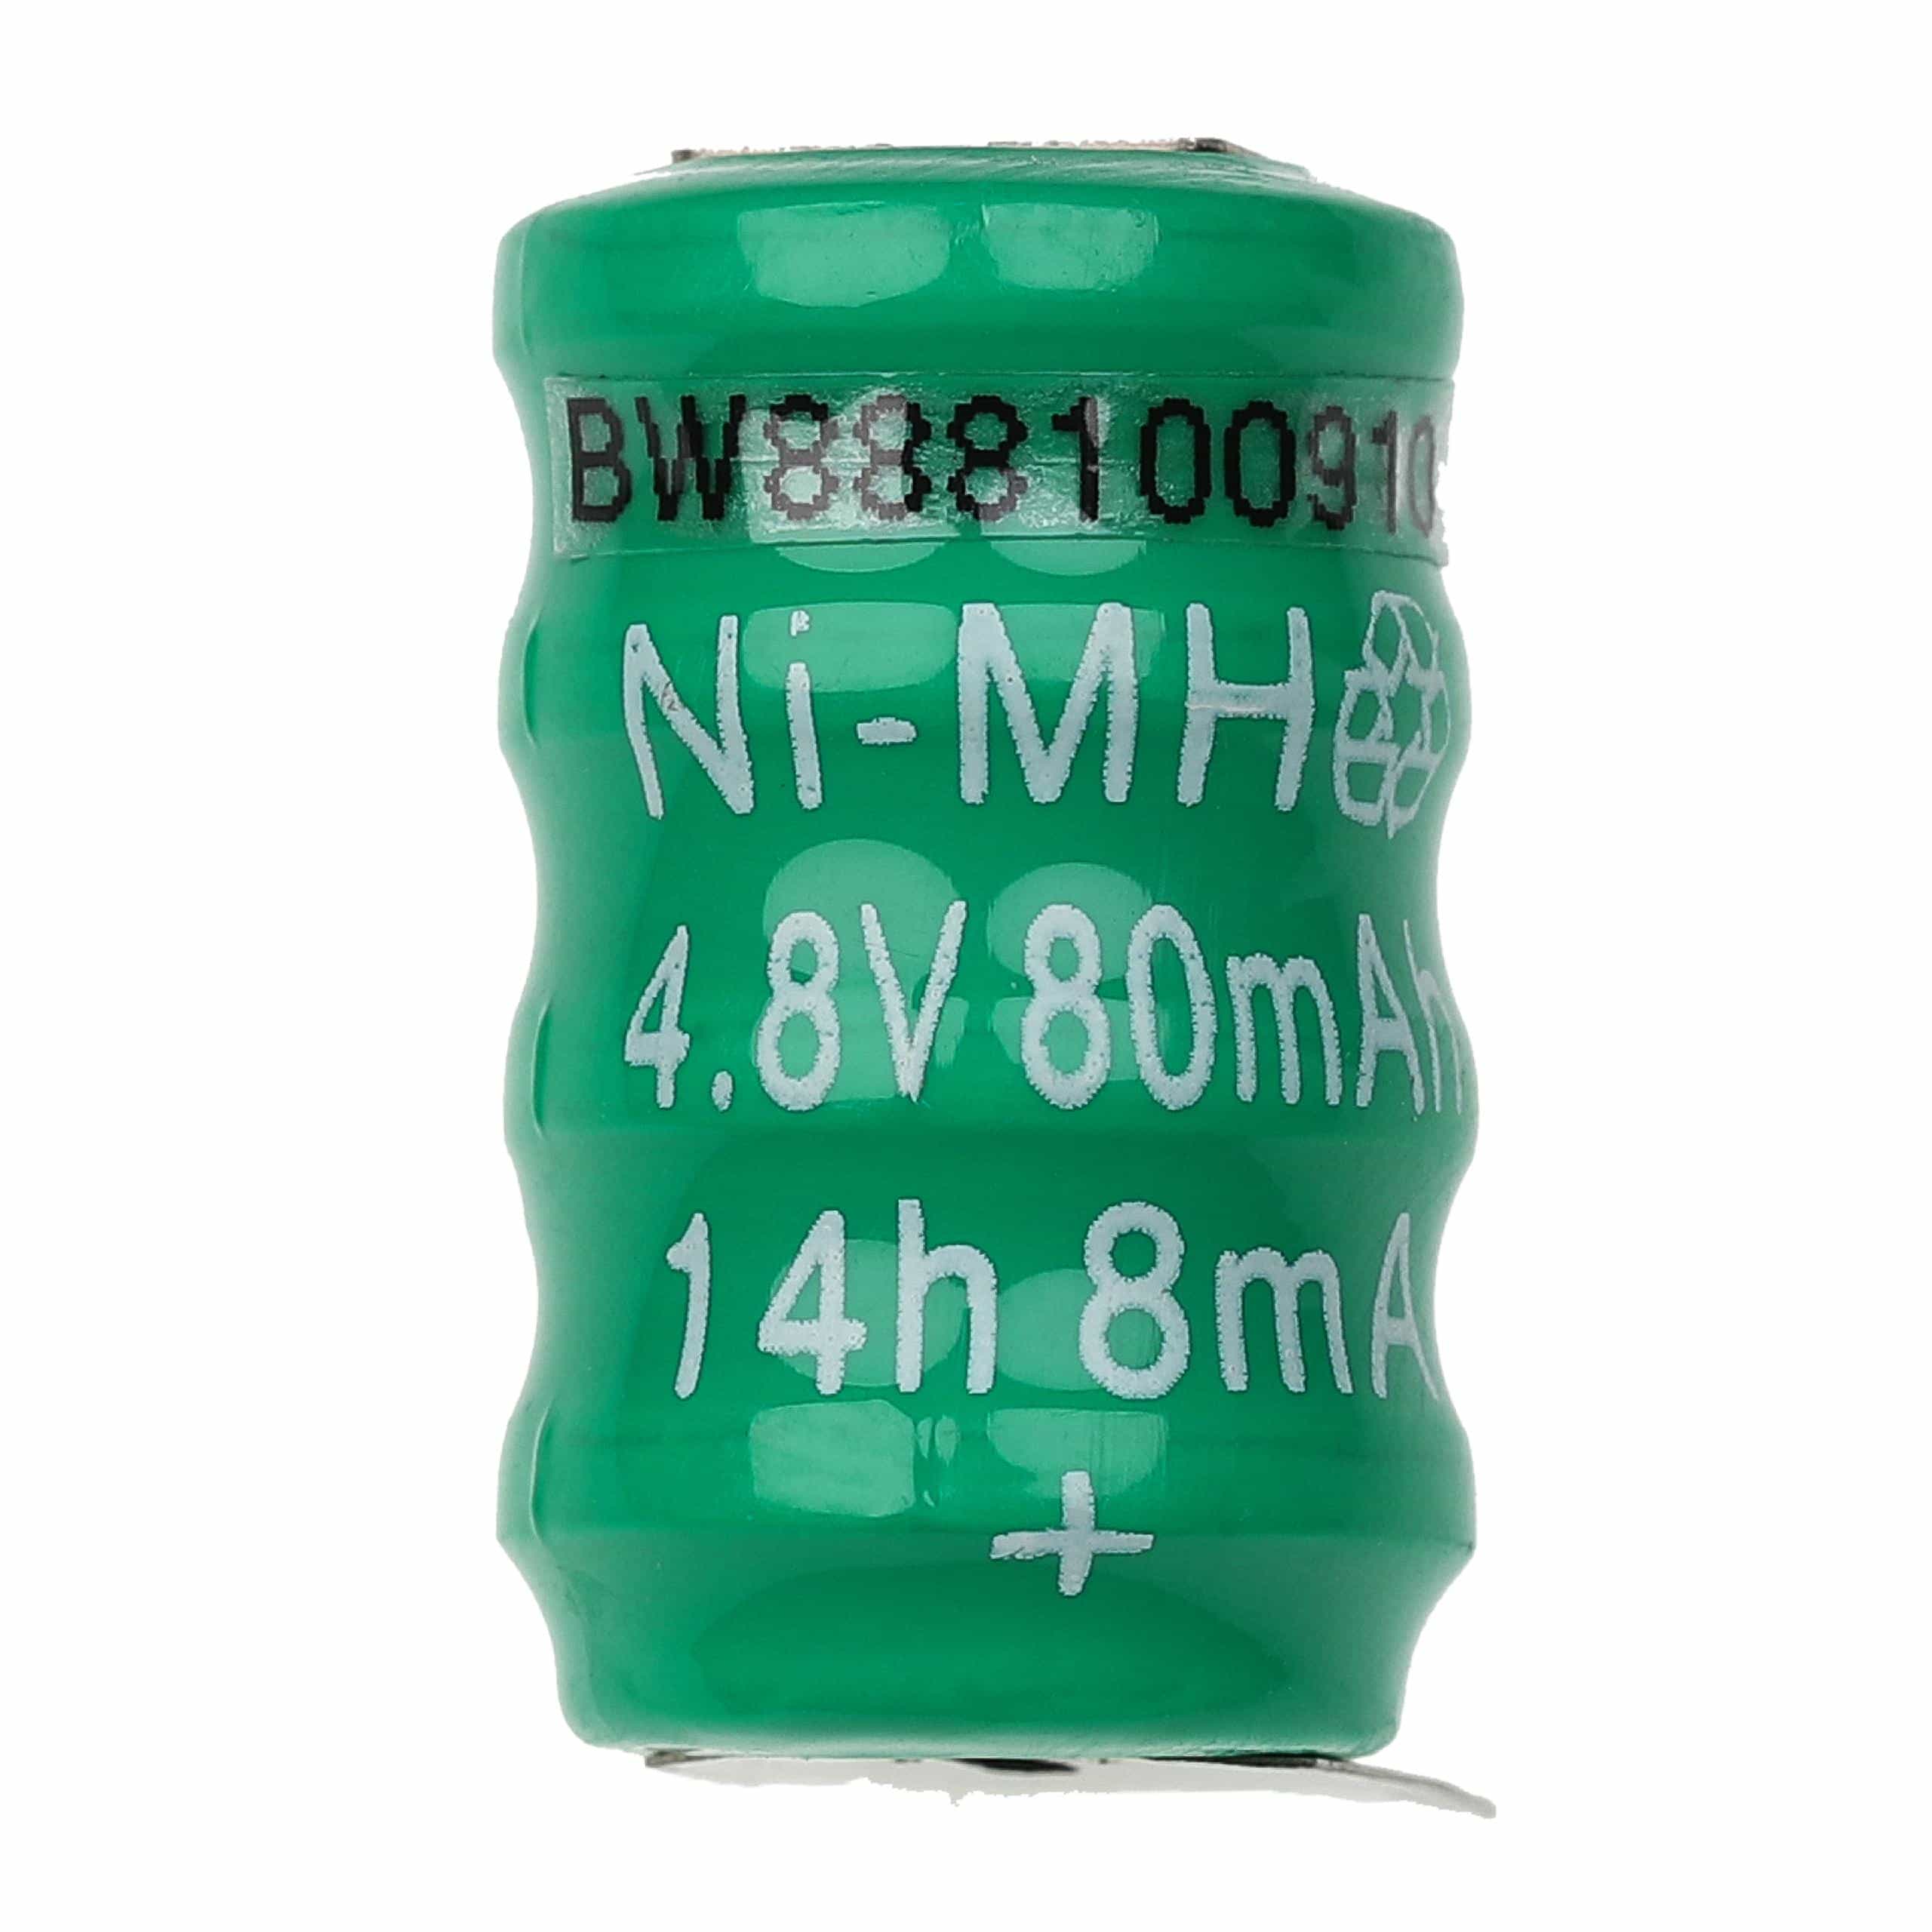 Akumulator guzikowy (4x ogniwo) typ 3 pin do modeli, lamp solarnych itp. zamiennik - 80 mAh 4,8 V NiMH